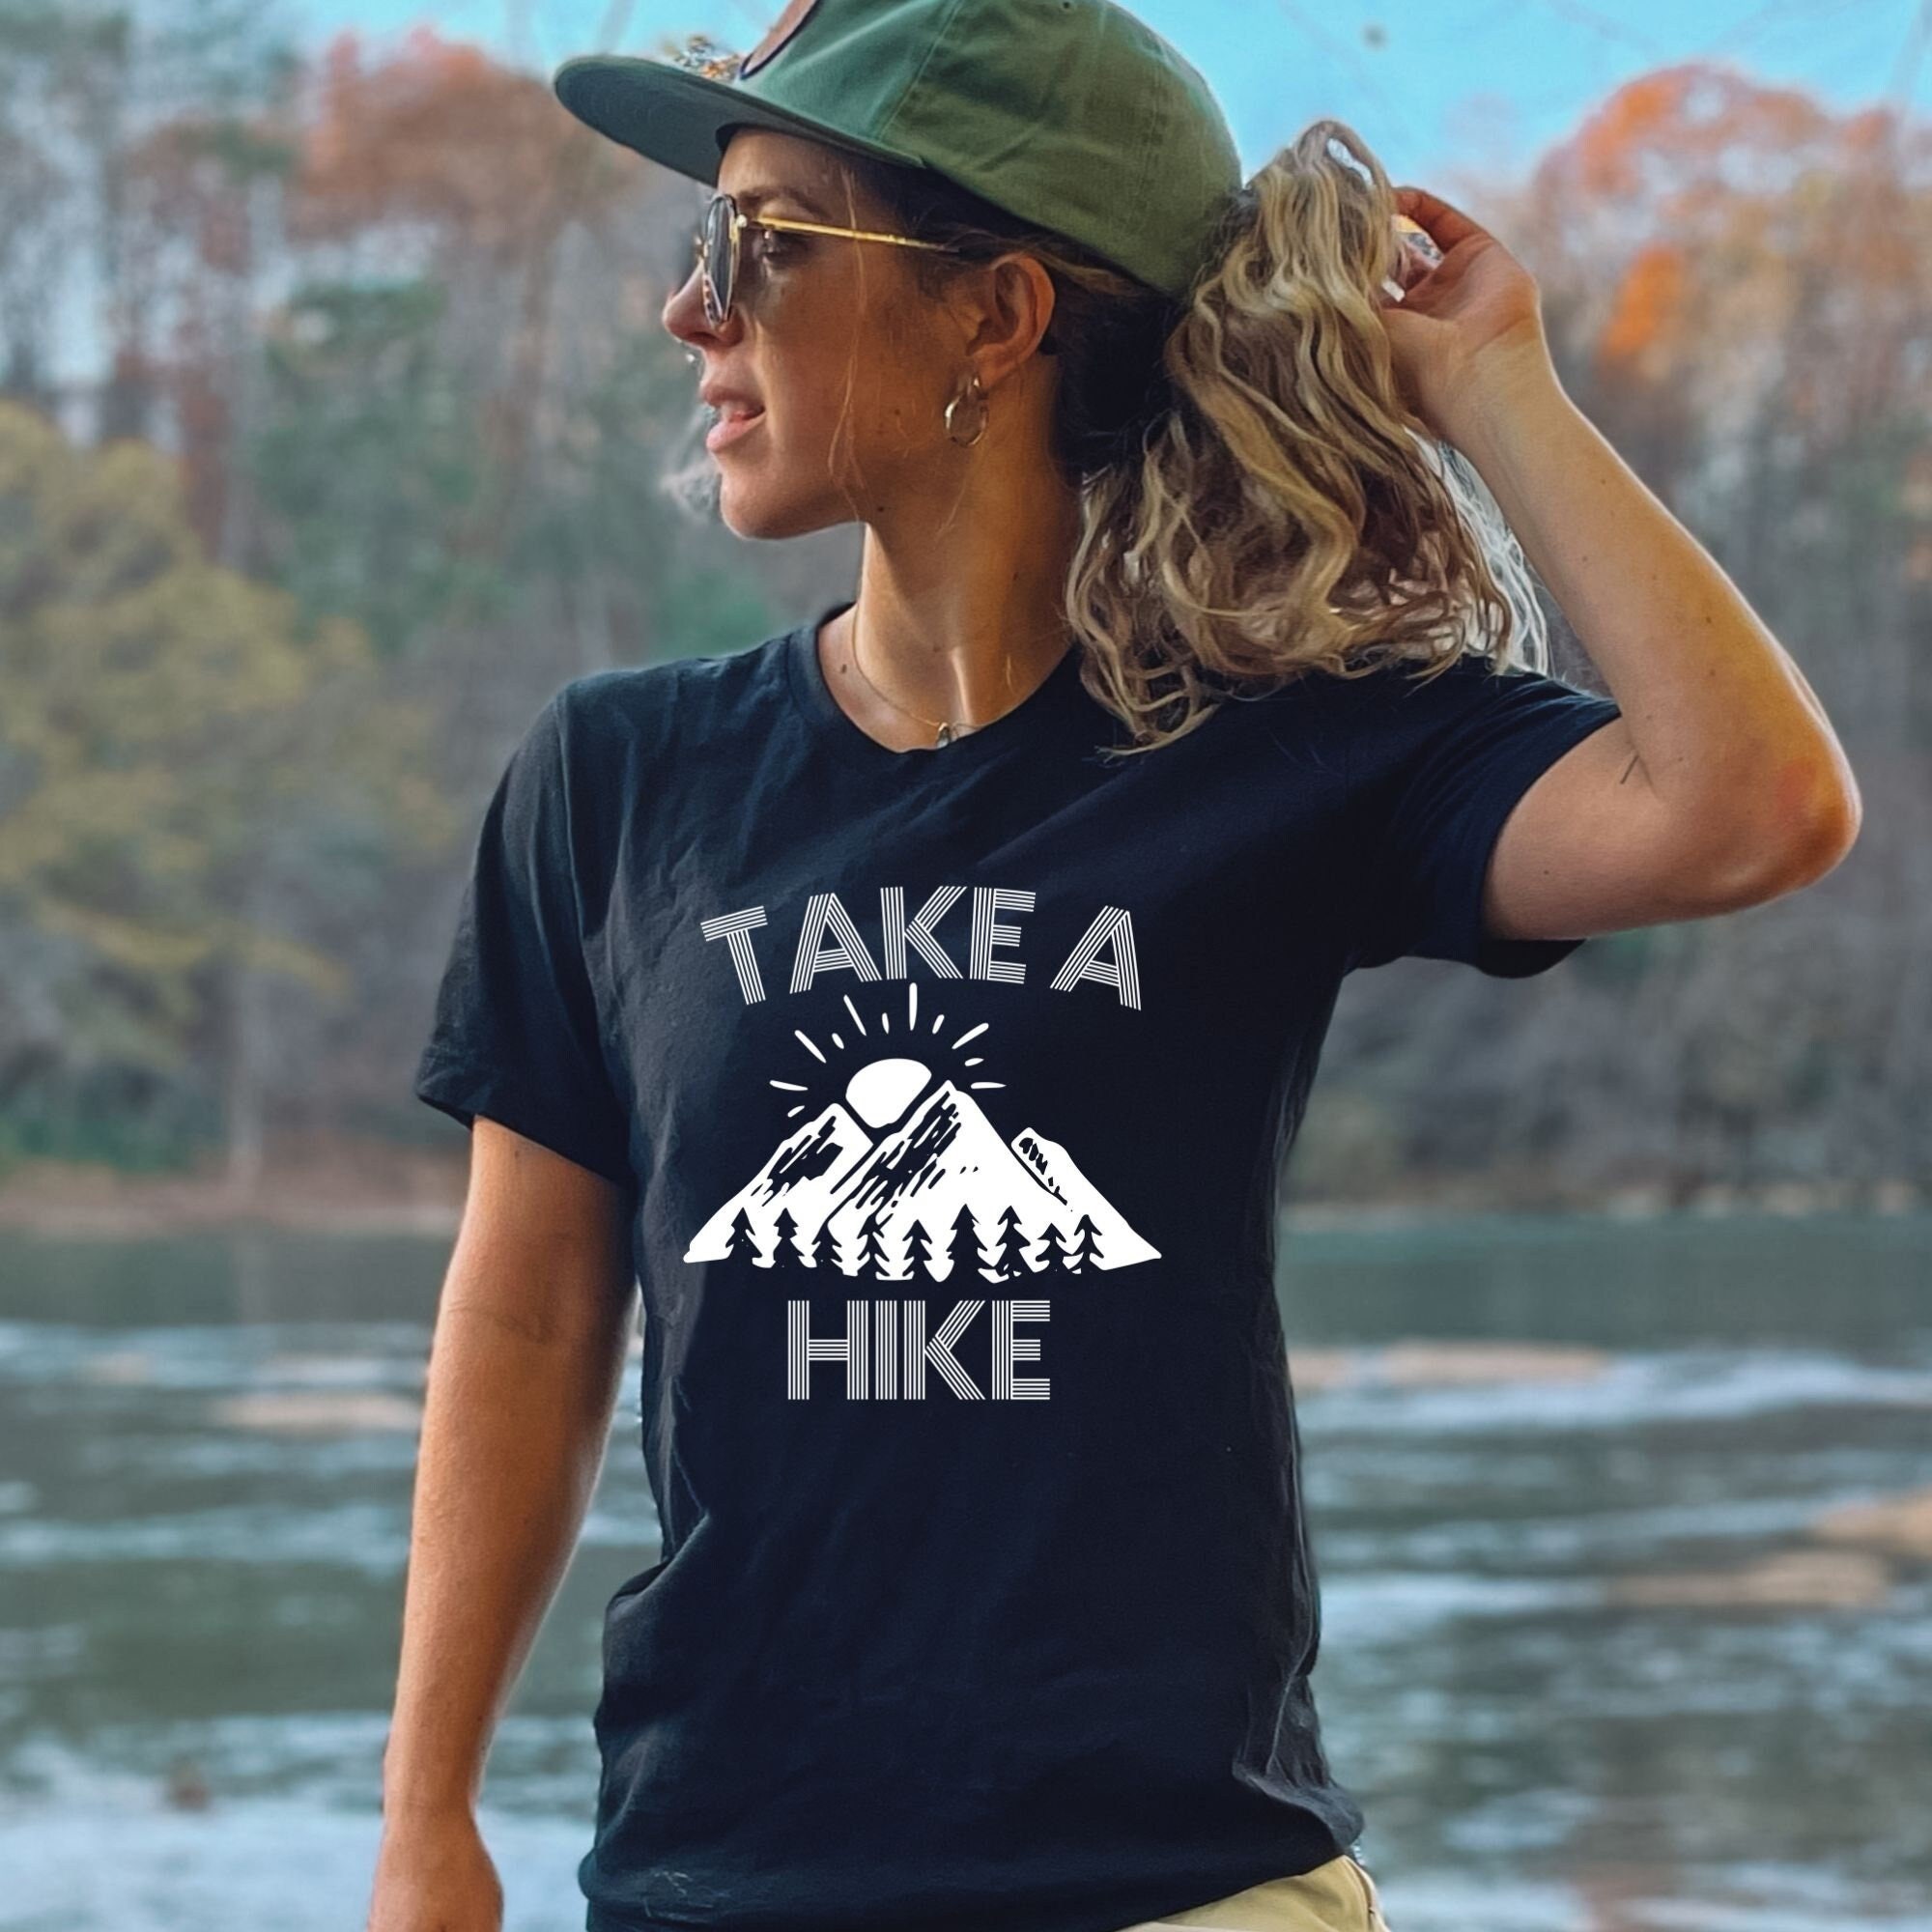 Hiking Shirt for Women, Cute Womens Shirts, Cool Graphic Tee, Cool